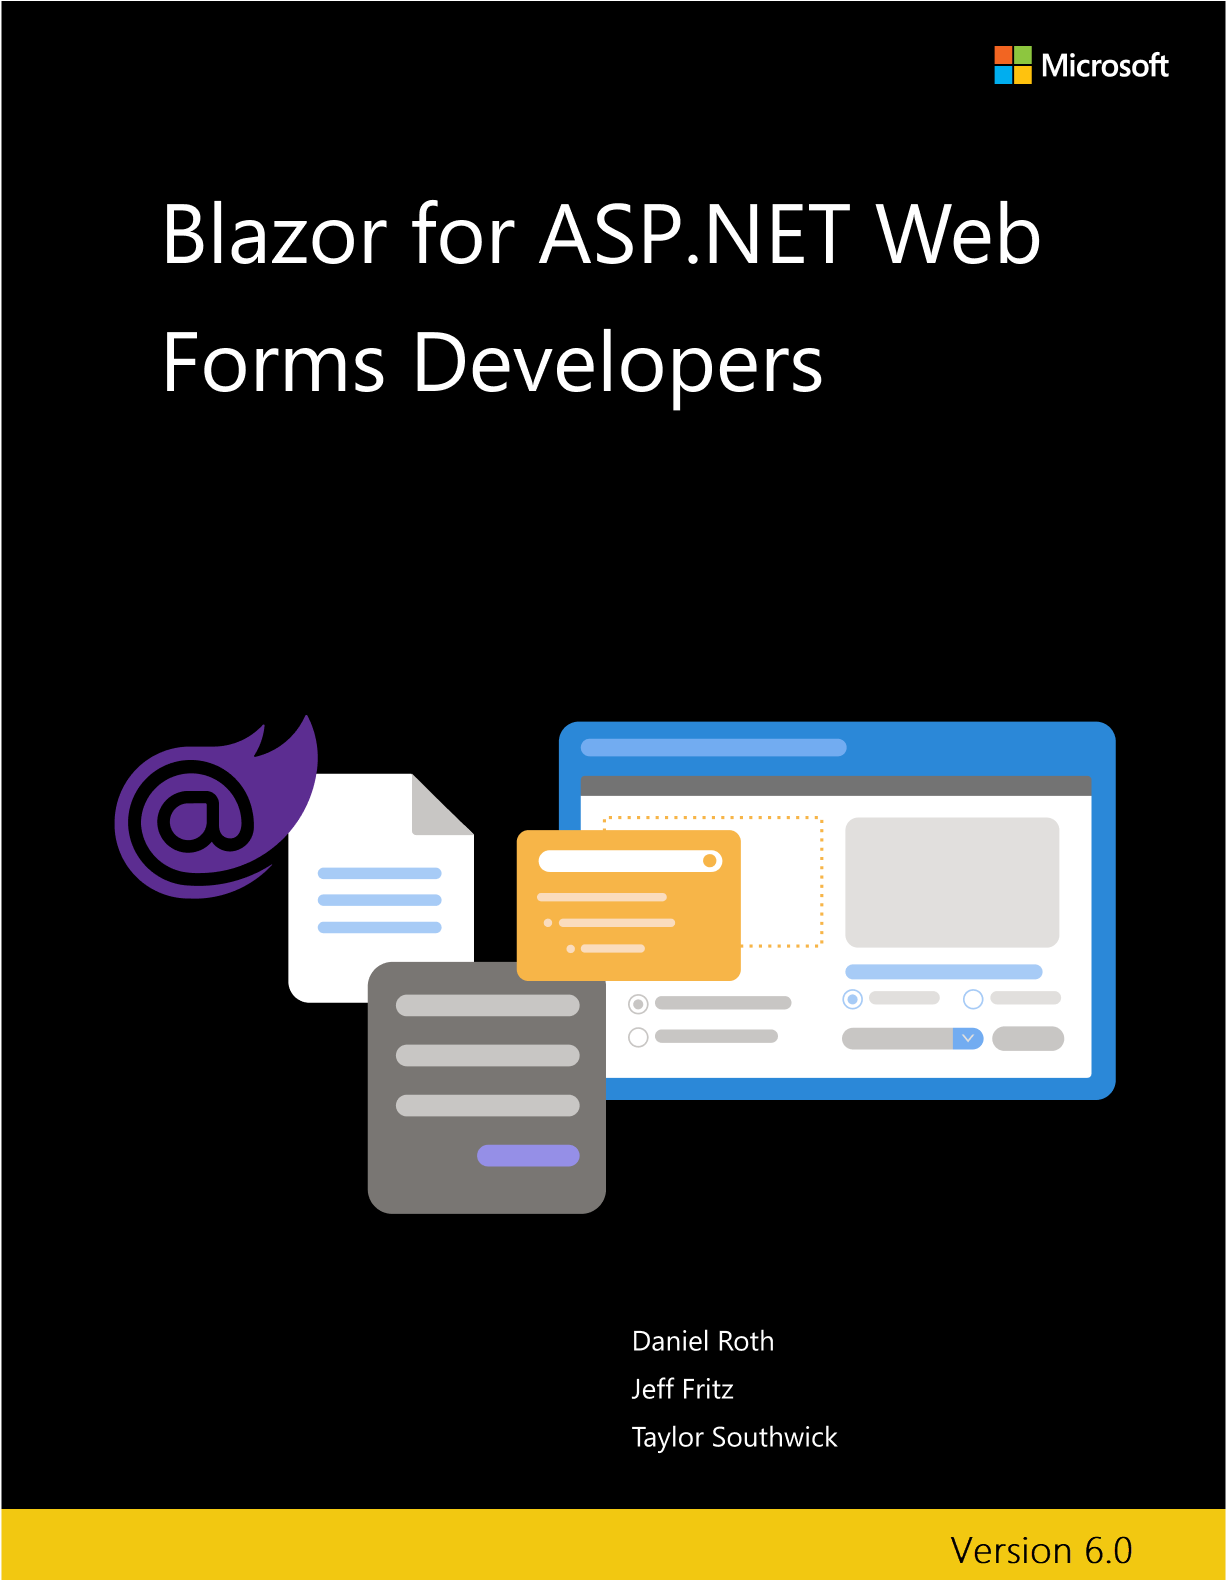 Blazor for ASP.NET Web Forms Developers | Microsoft Learn